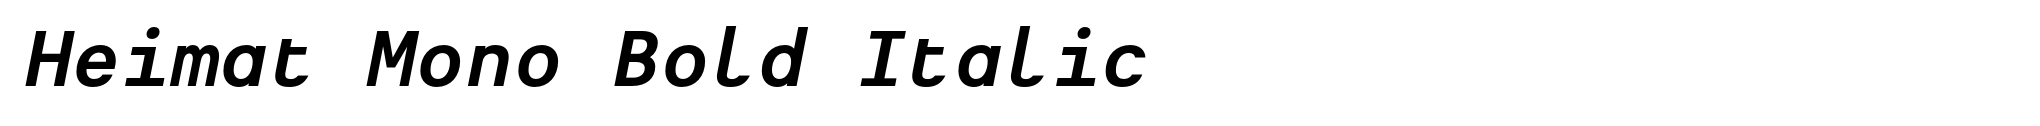 Heimat Mono Bold Italic image